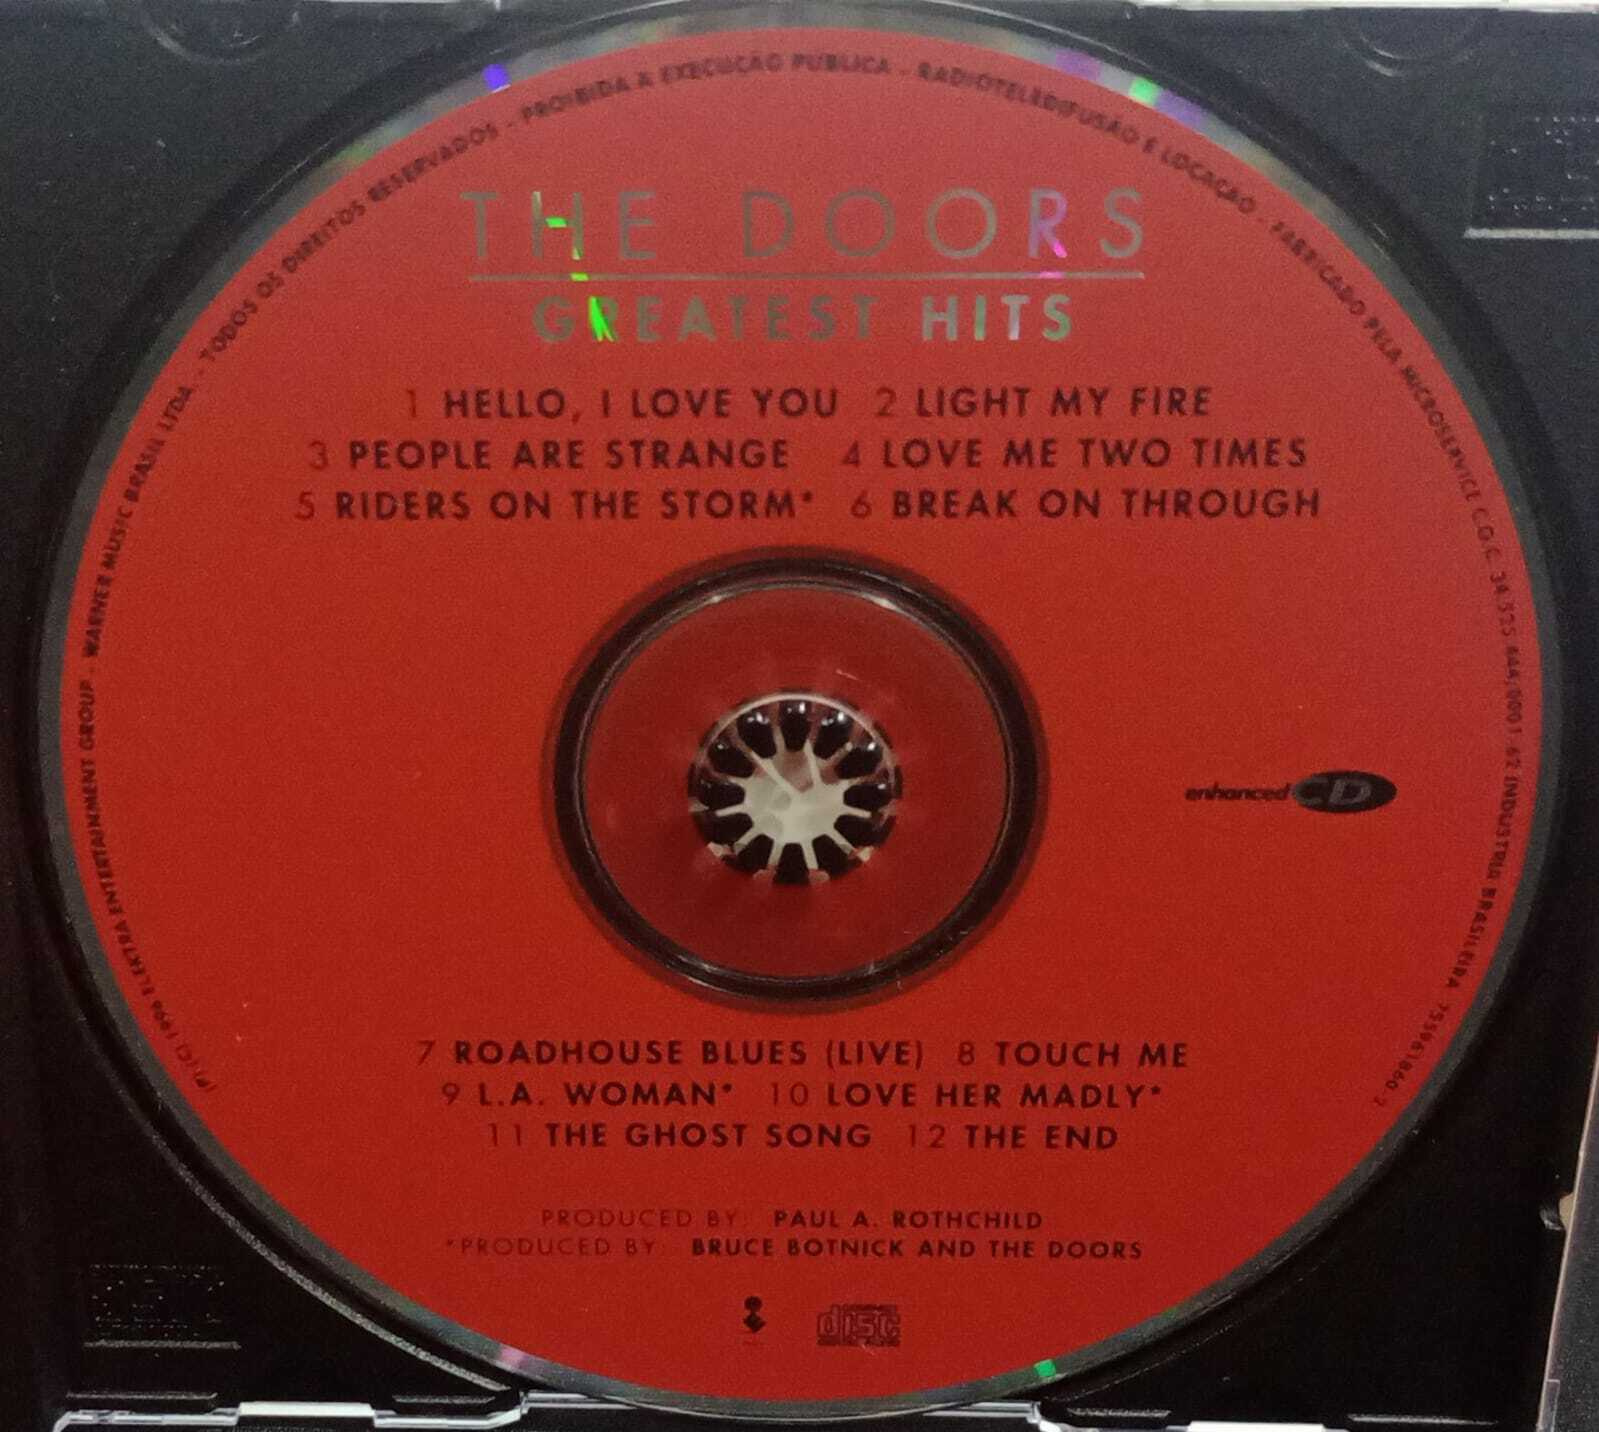 CD - Doors the - Greatest Hits